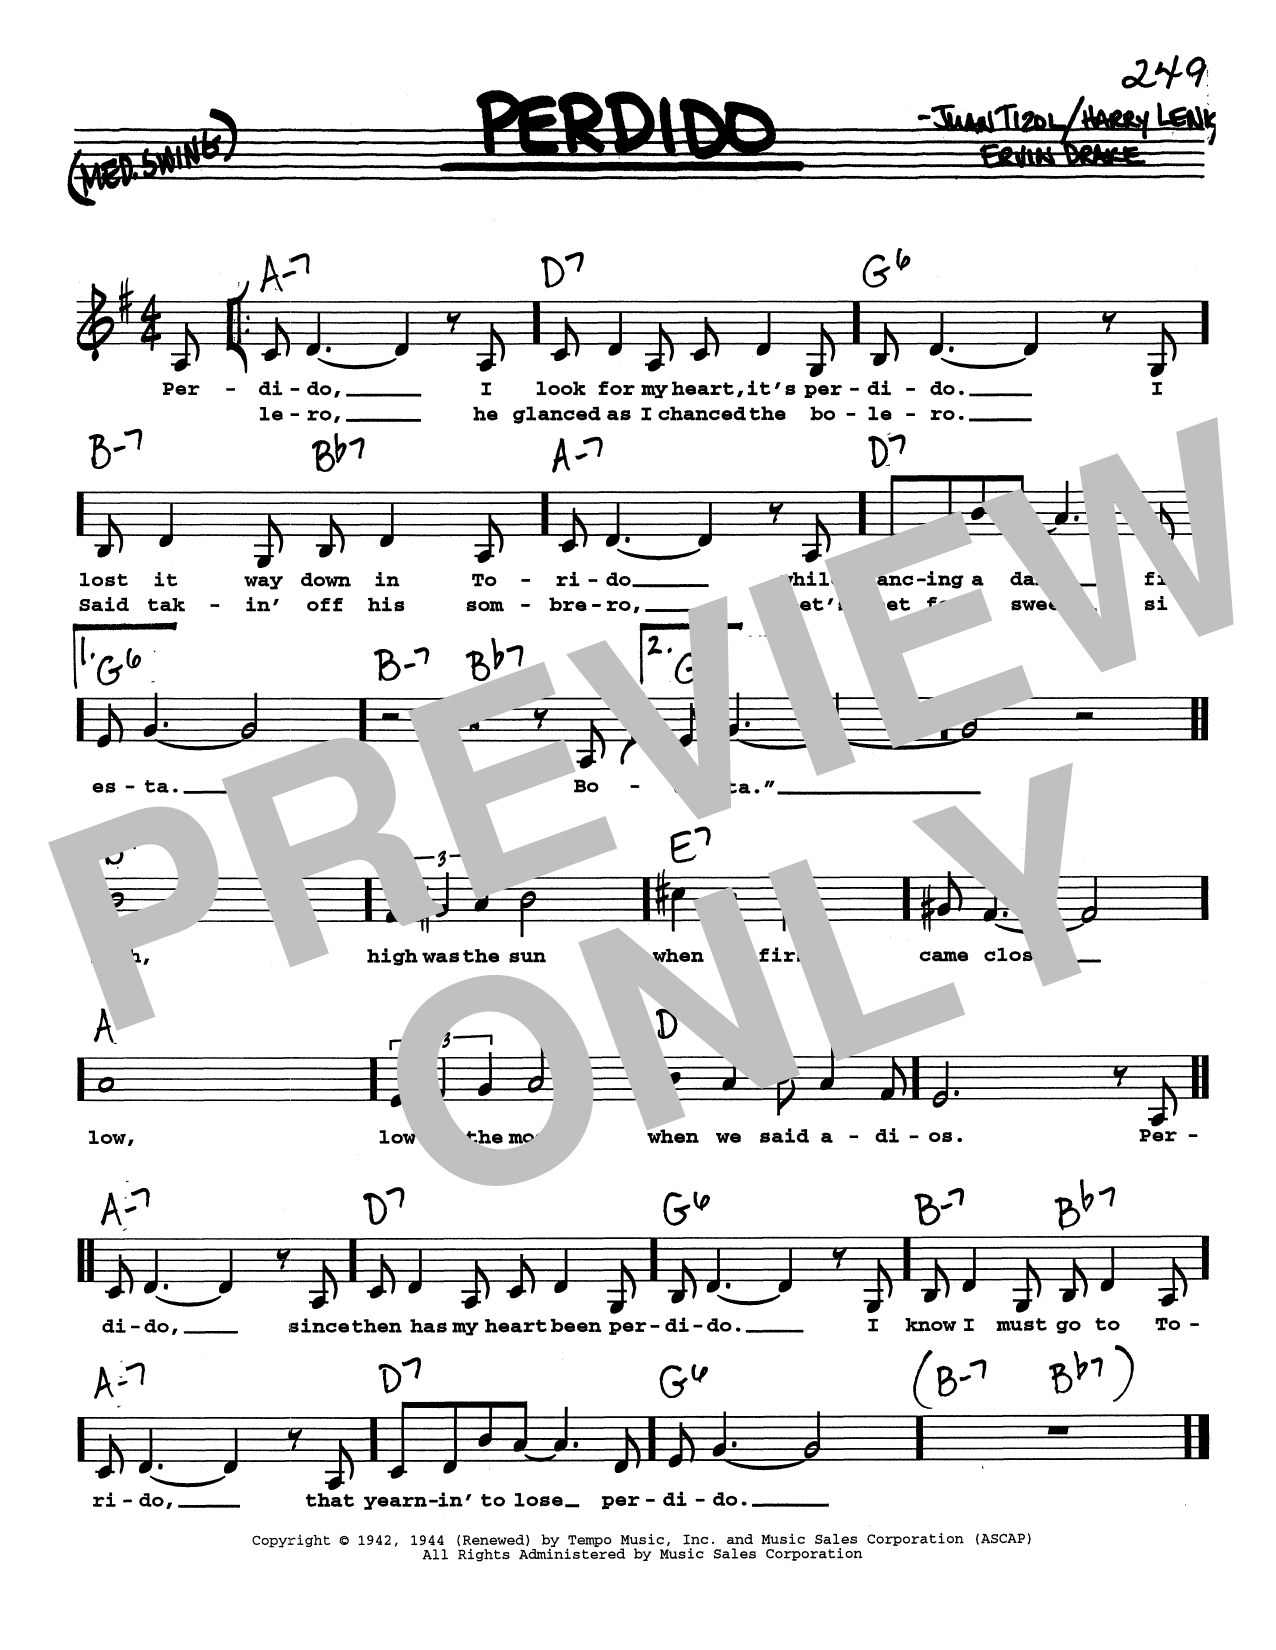 Duke Ellington Perdido (Low Voice) Sheet Music Notes & Chords for Real Book – Melody, Lyrics & Chords - Download or Print PDF